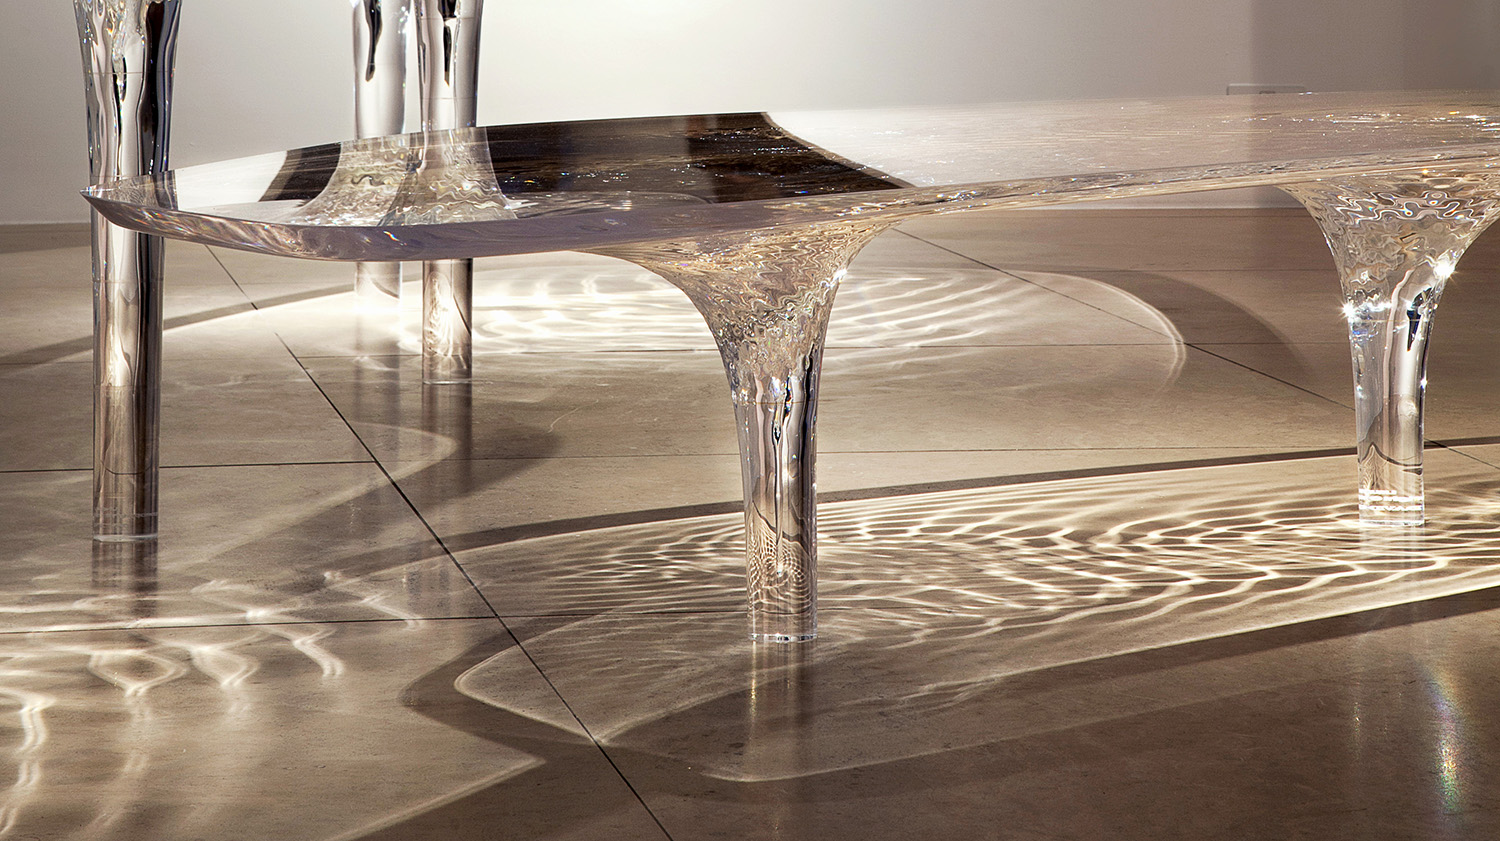 ZH Coffee Table 'Liquid Glacial' Installation.JPG